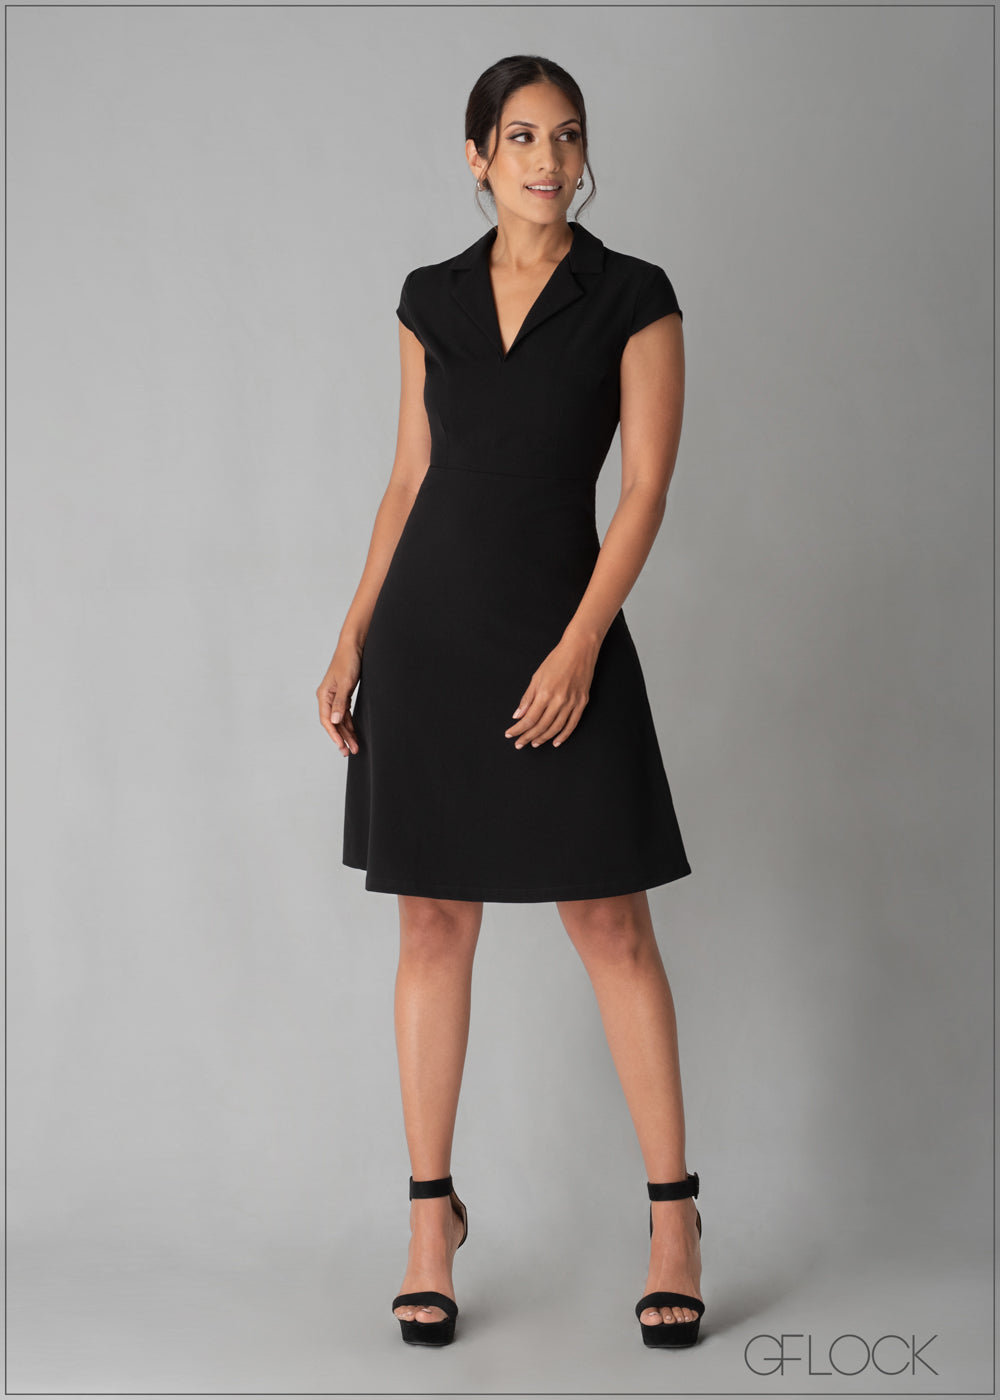 Lapel Collar Short Sleeve Dress - 020523